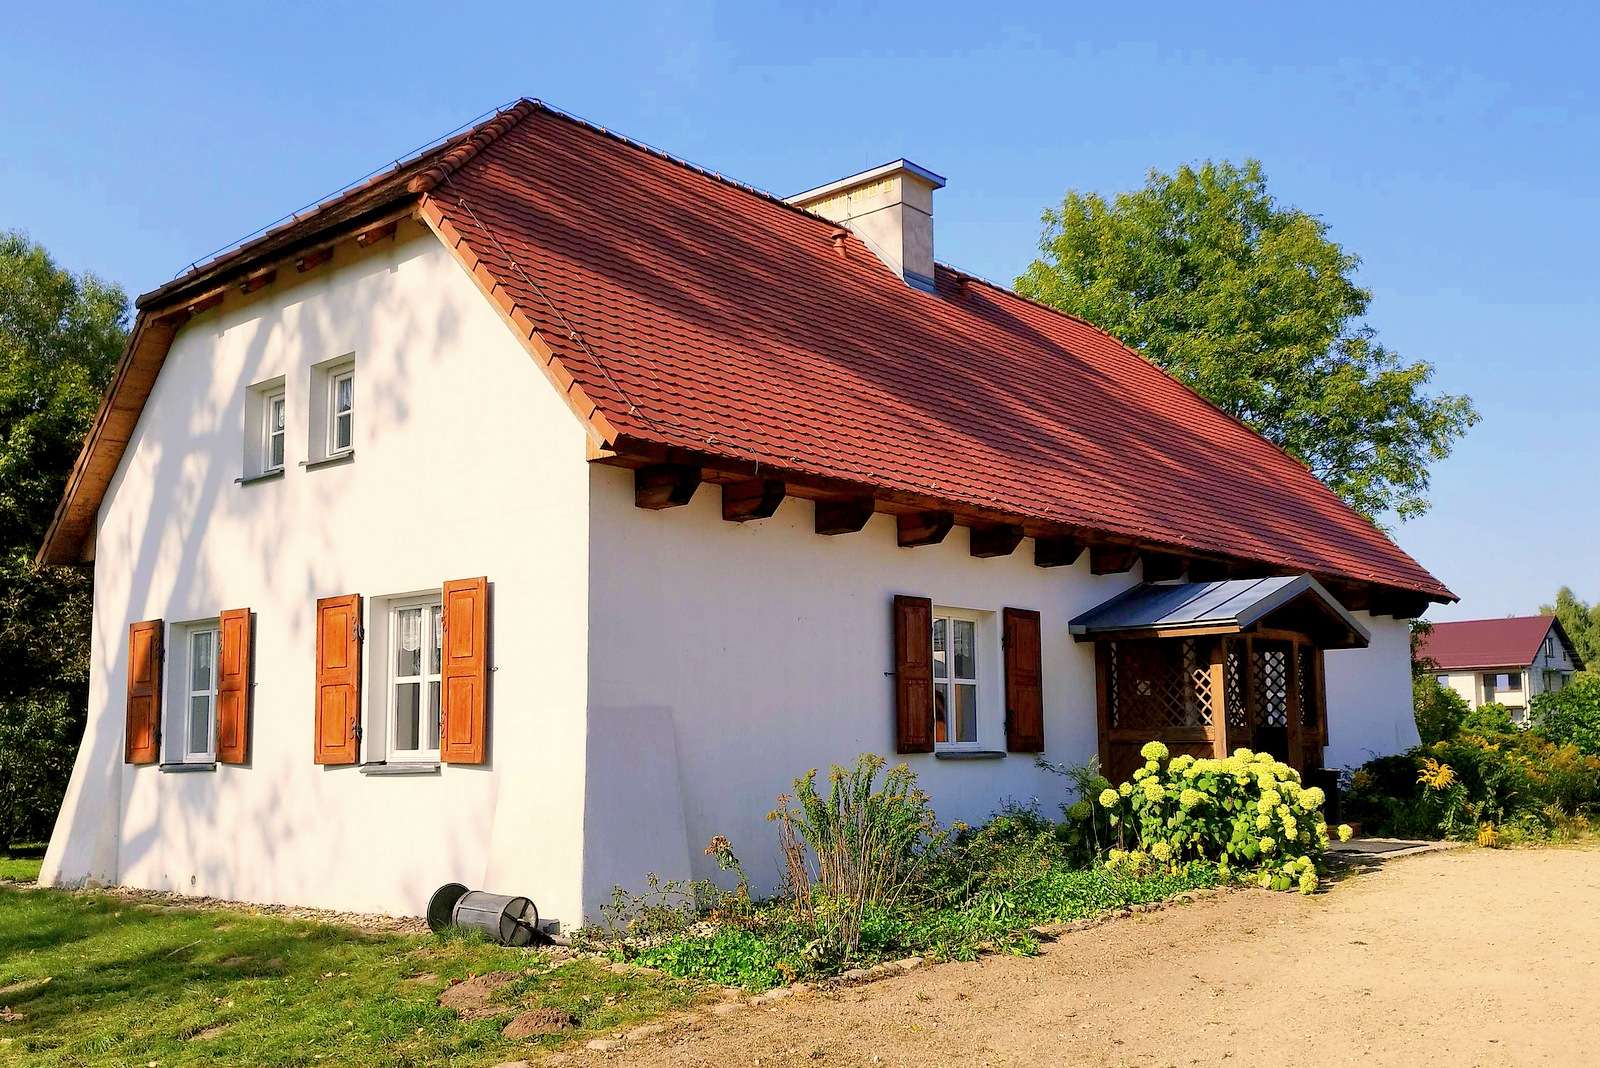 Casa de campo em Radziejowice (Polônia) puzzle online